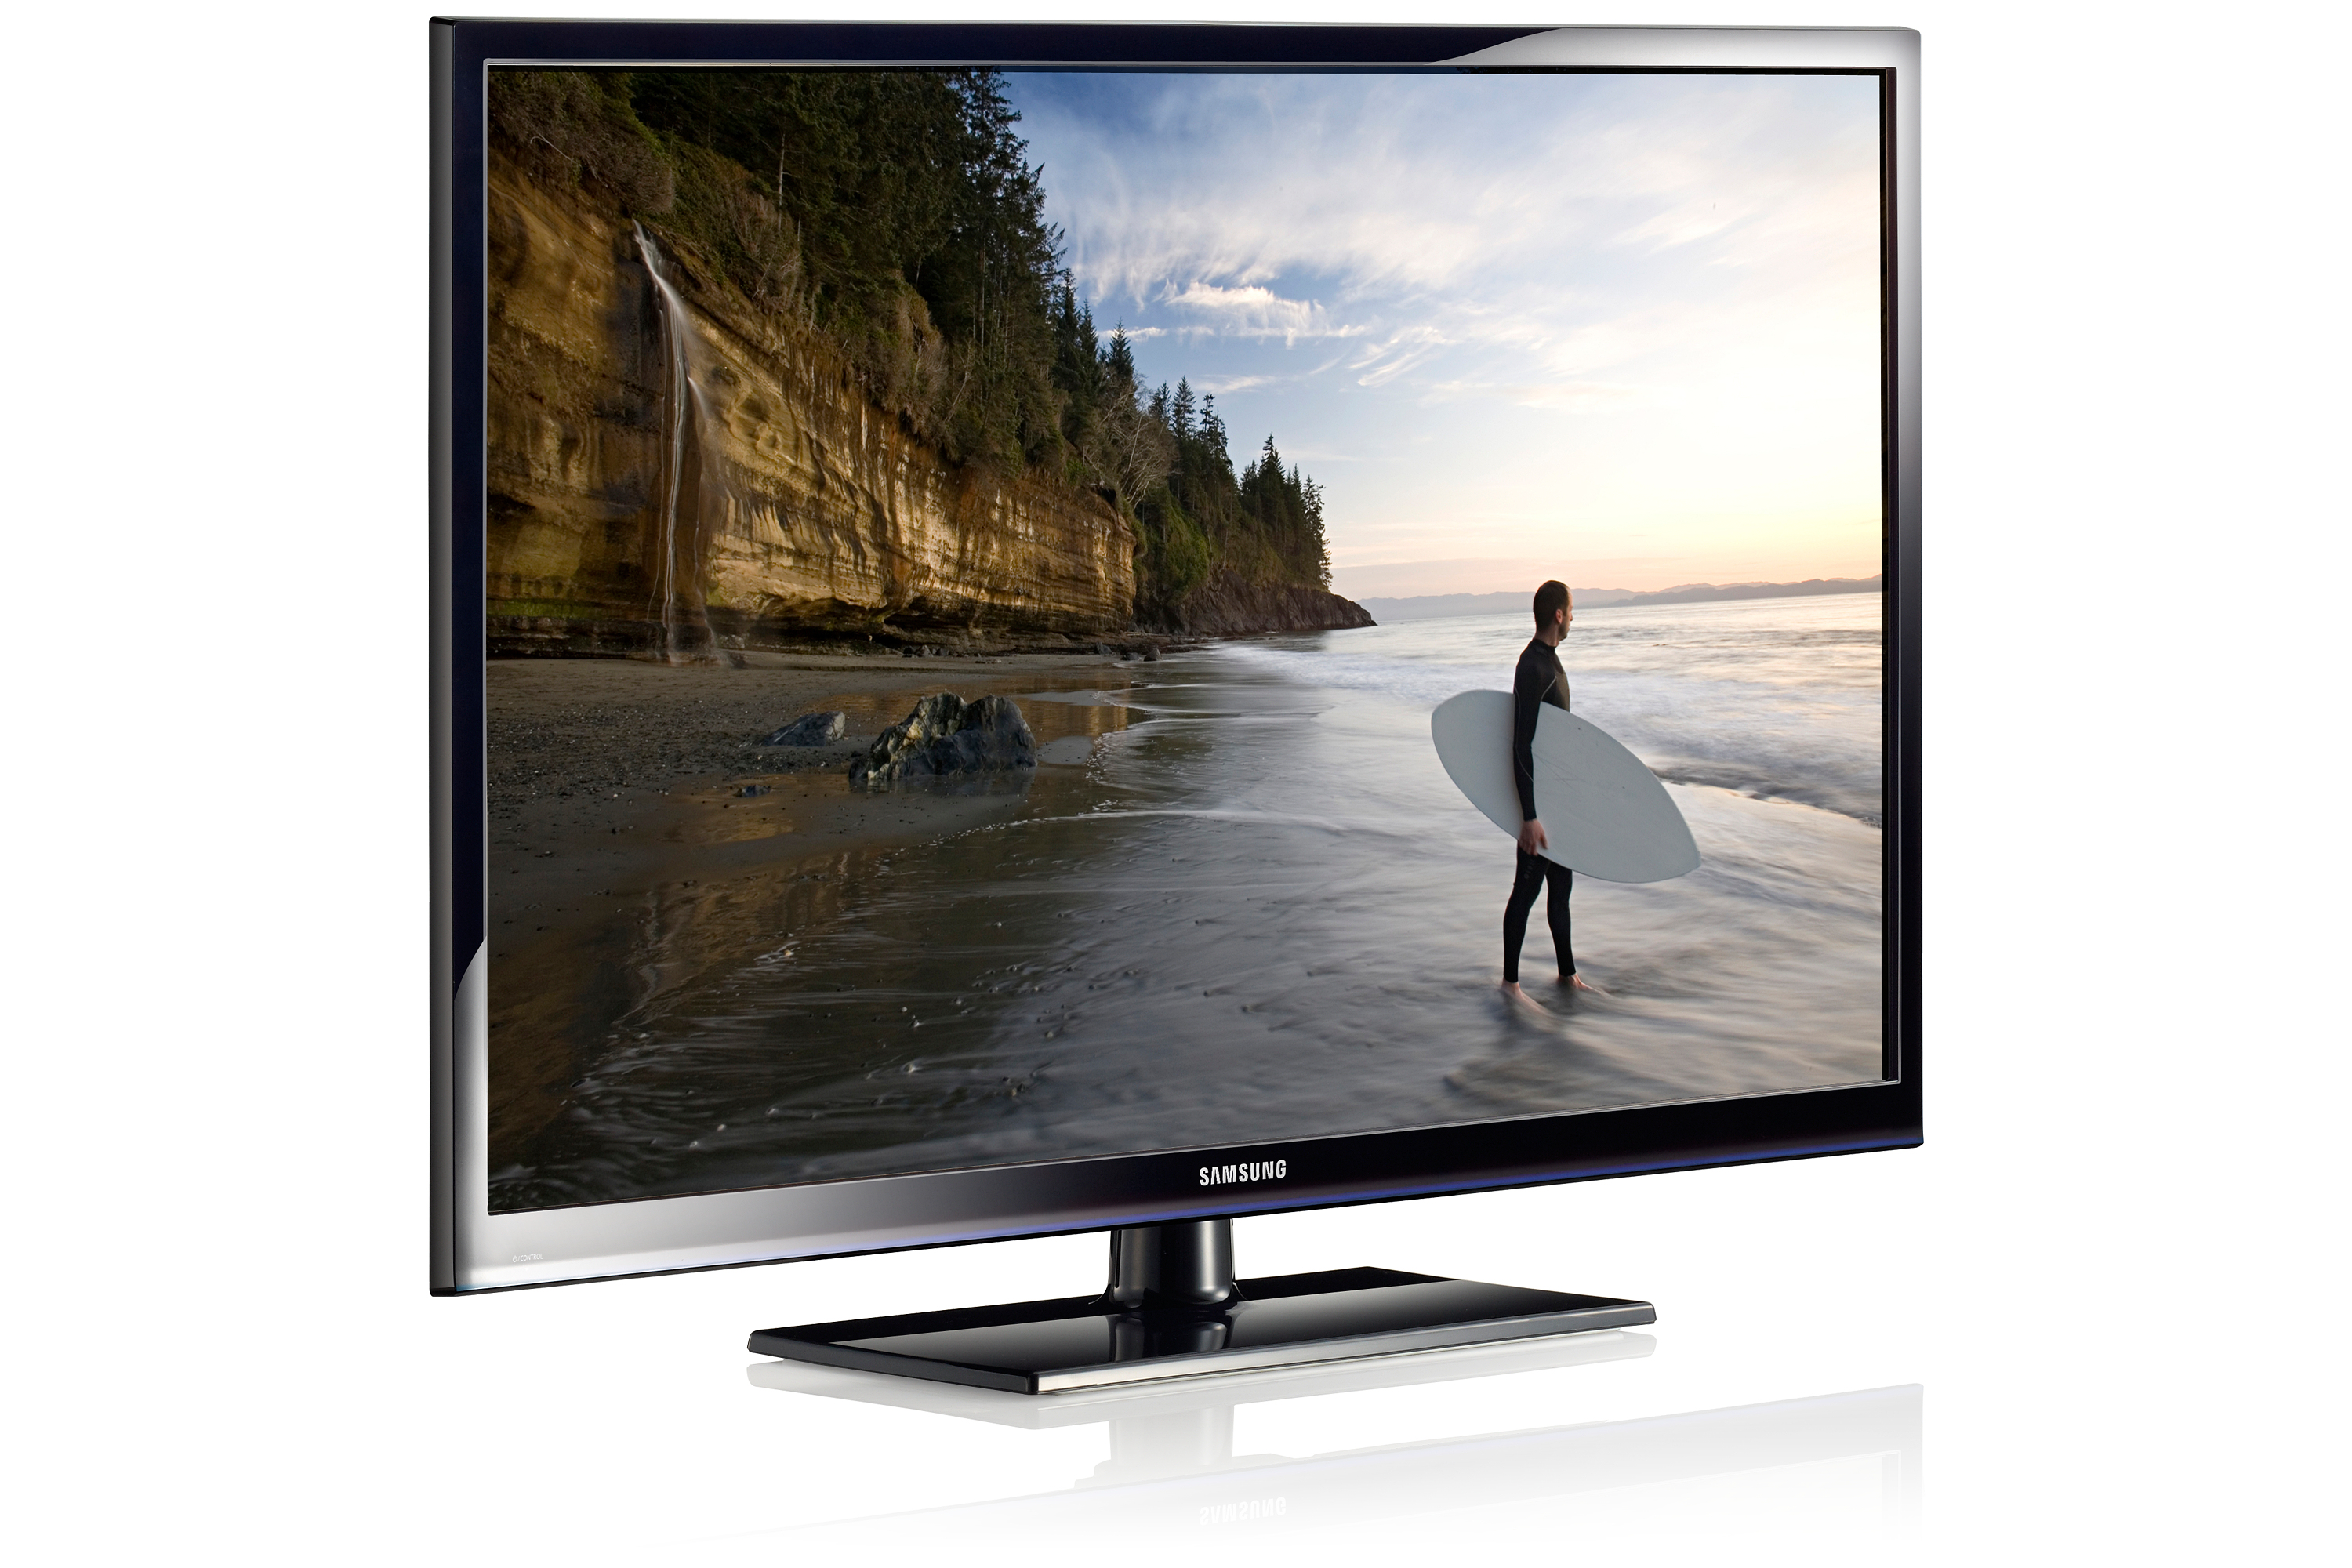 Телевизор es pro 55. Samsung Smart TV 40. Телевизор самсунг 42 дюйма смарт. Samsung телевизор 2012 Smart TV. Телевизор самсунг 46 led смарт ТВ.